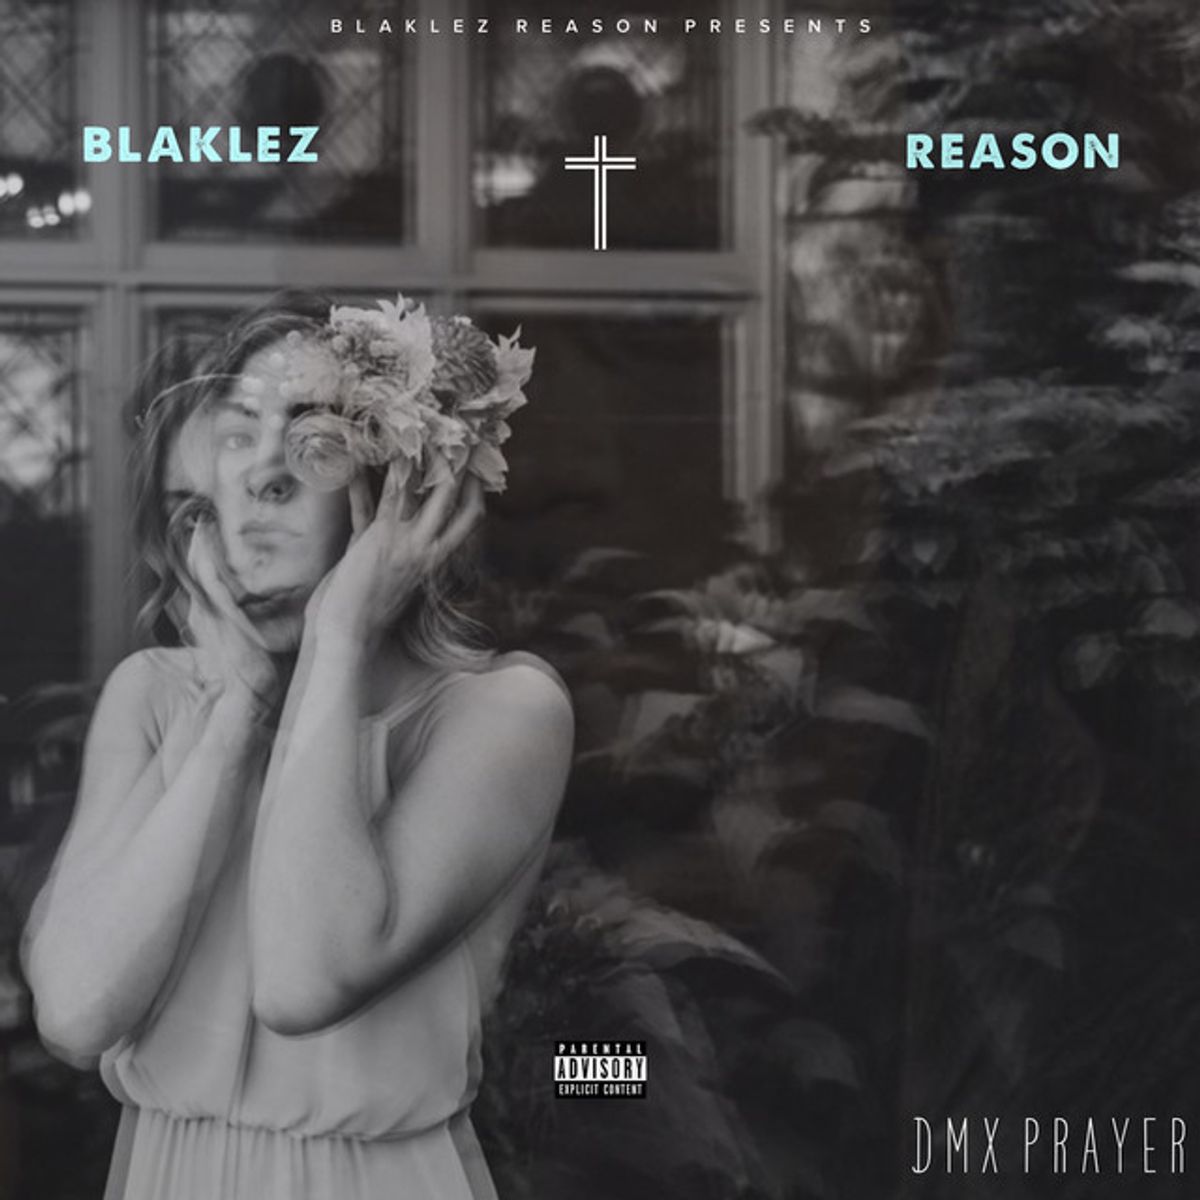 Listen to Blaklez and Reason’s Introspective Single ‘DMX Prayer’